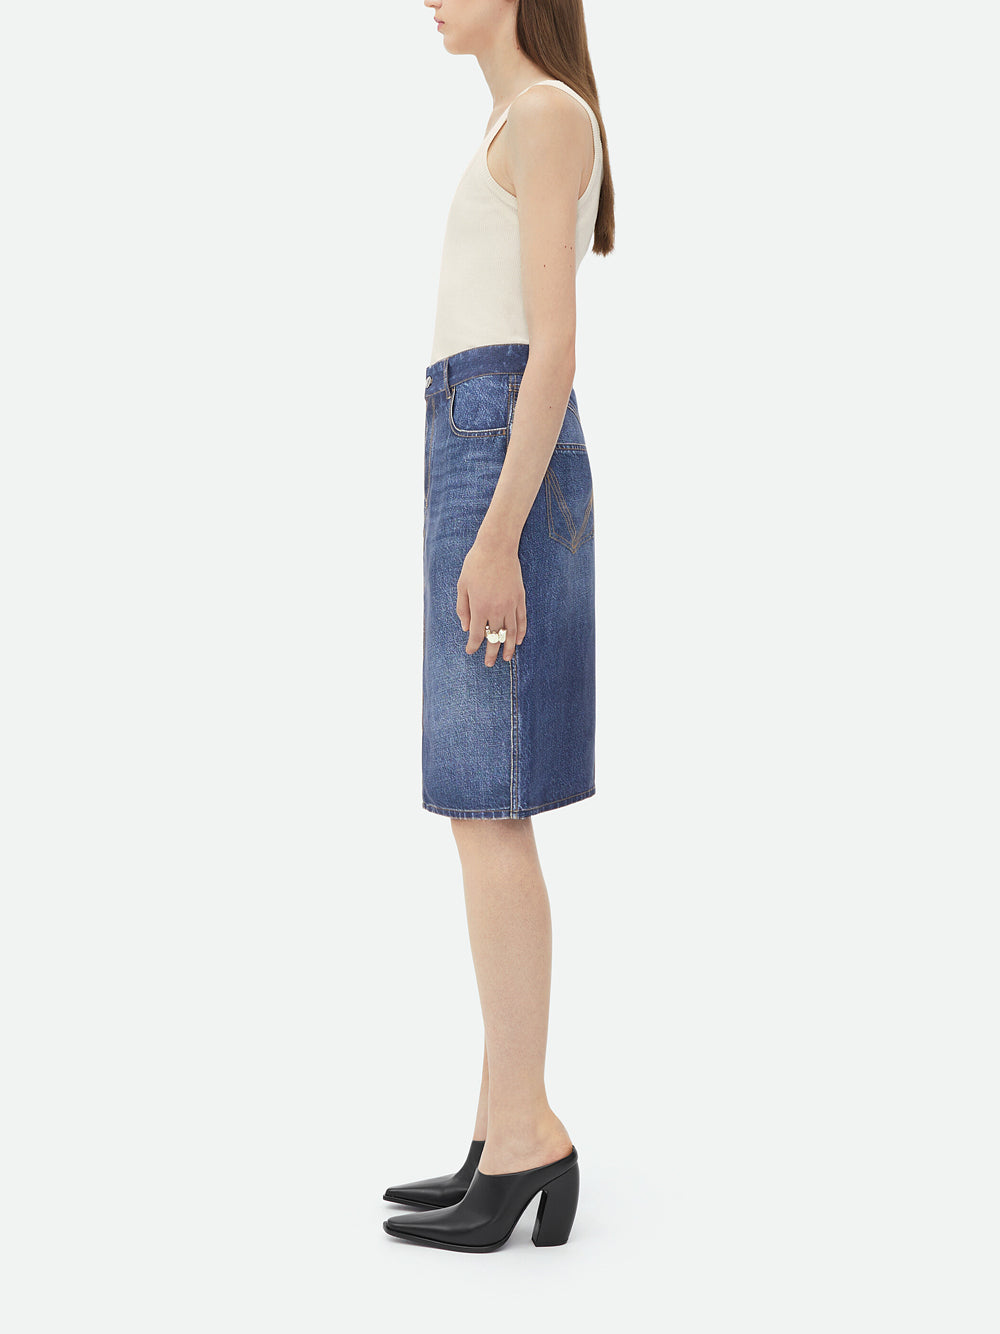 Demin printed skirt